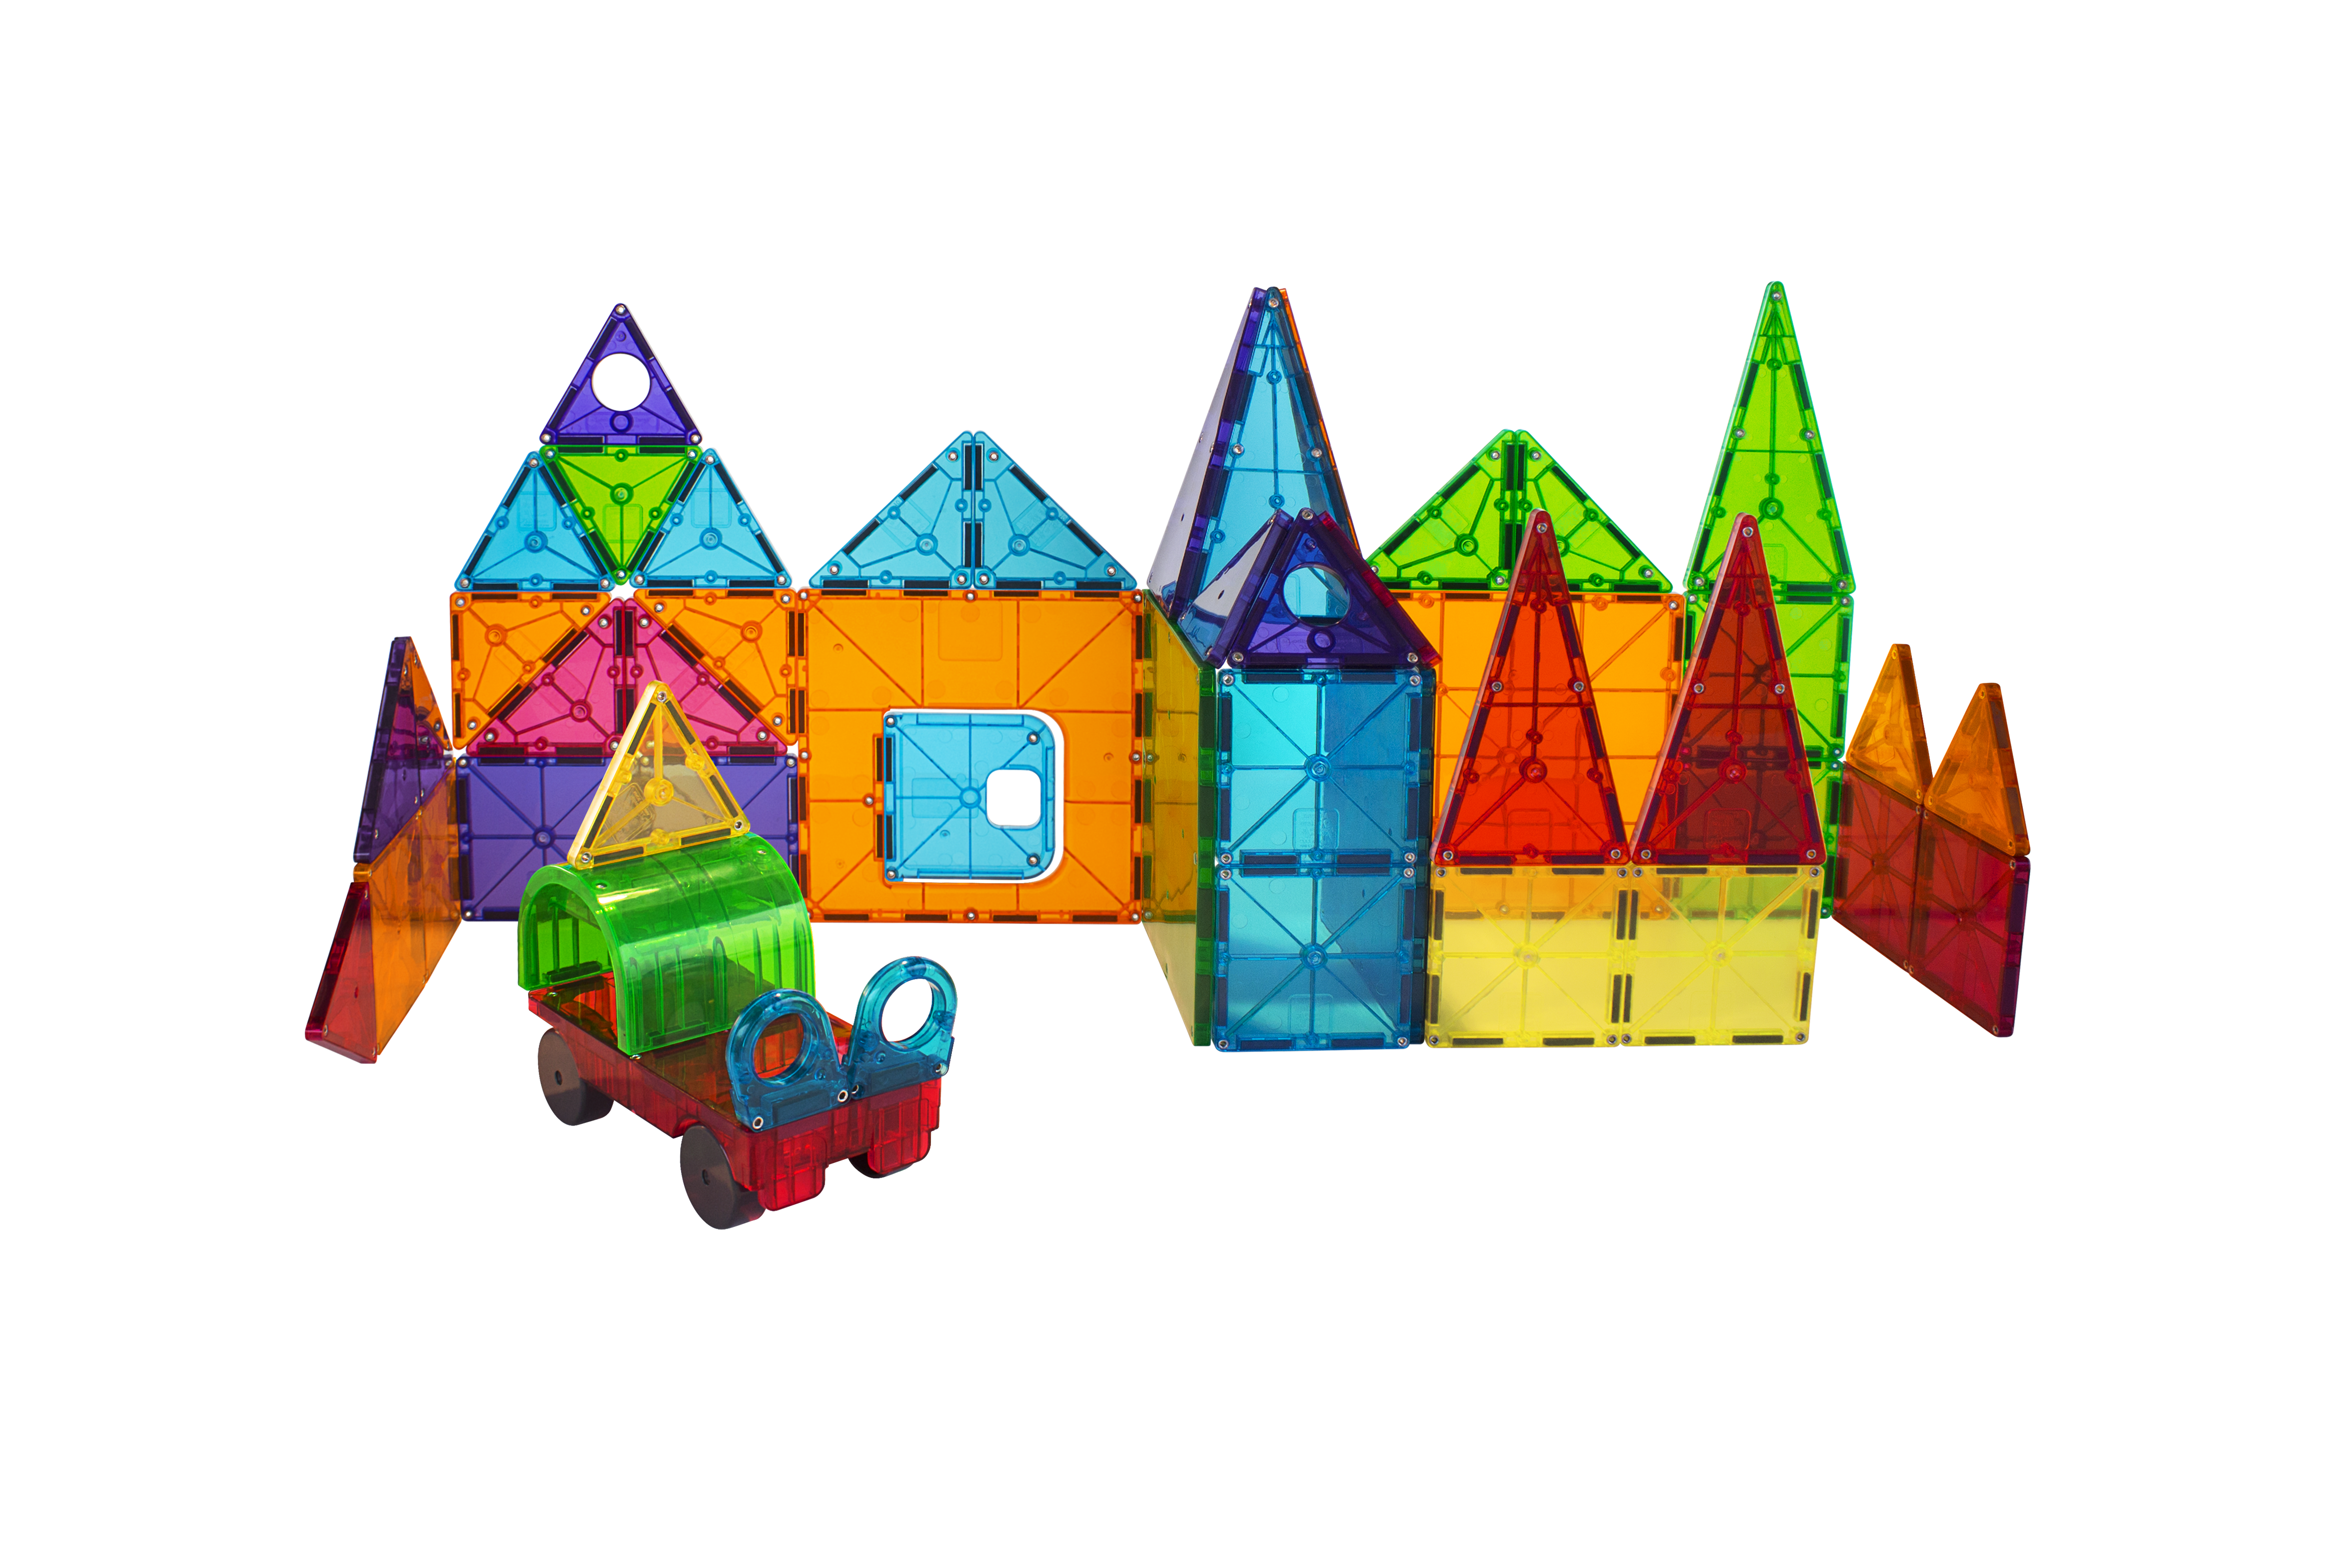 Children's colorful building blocks